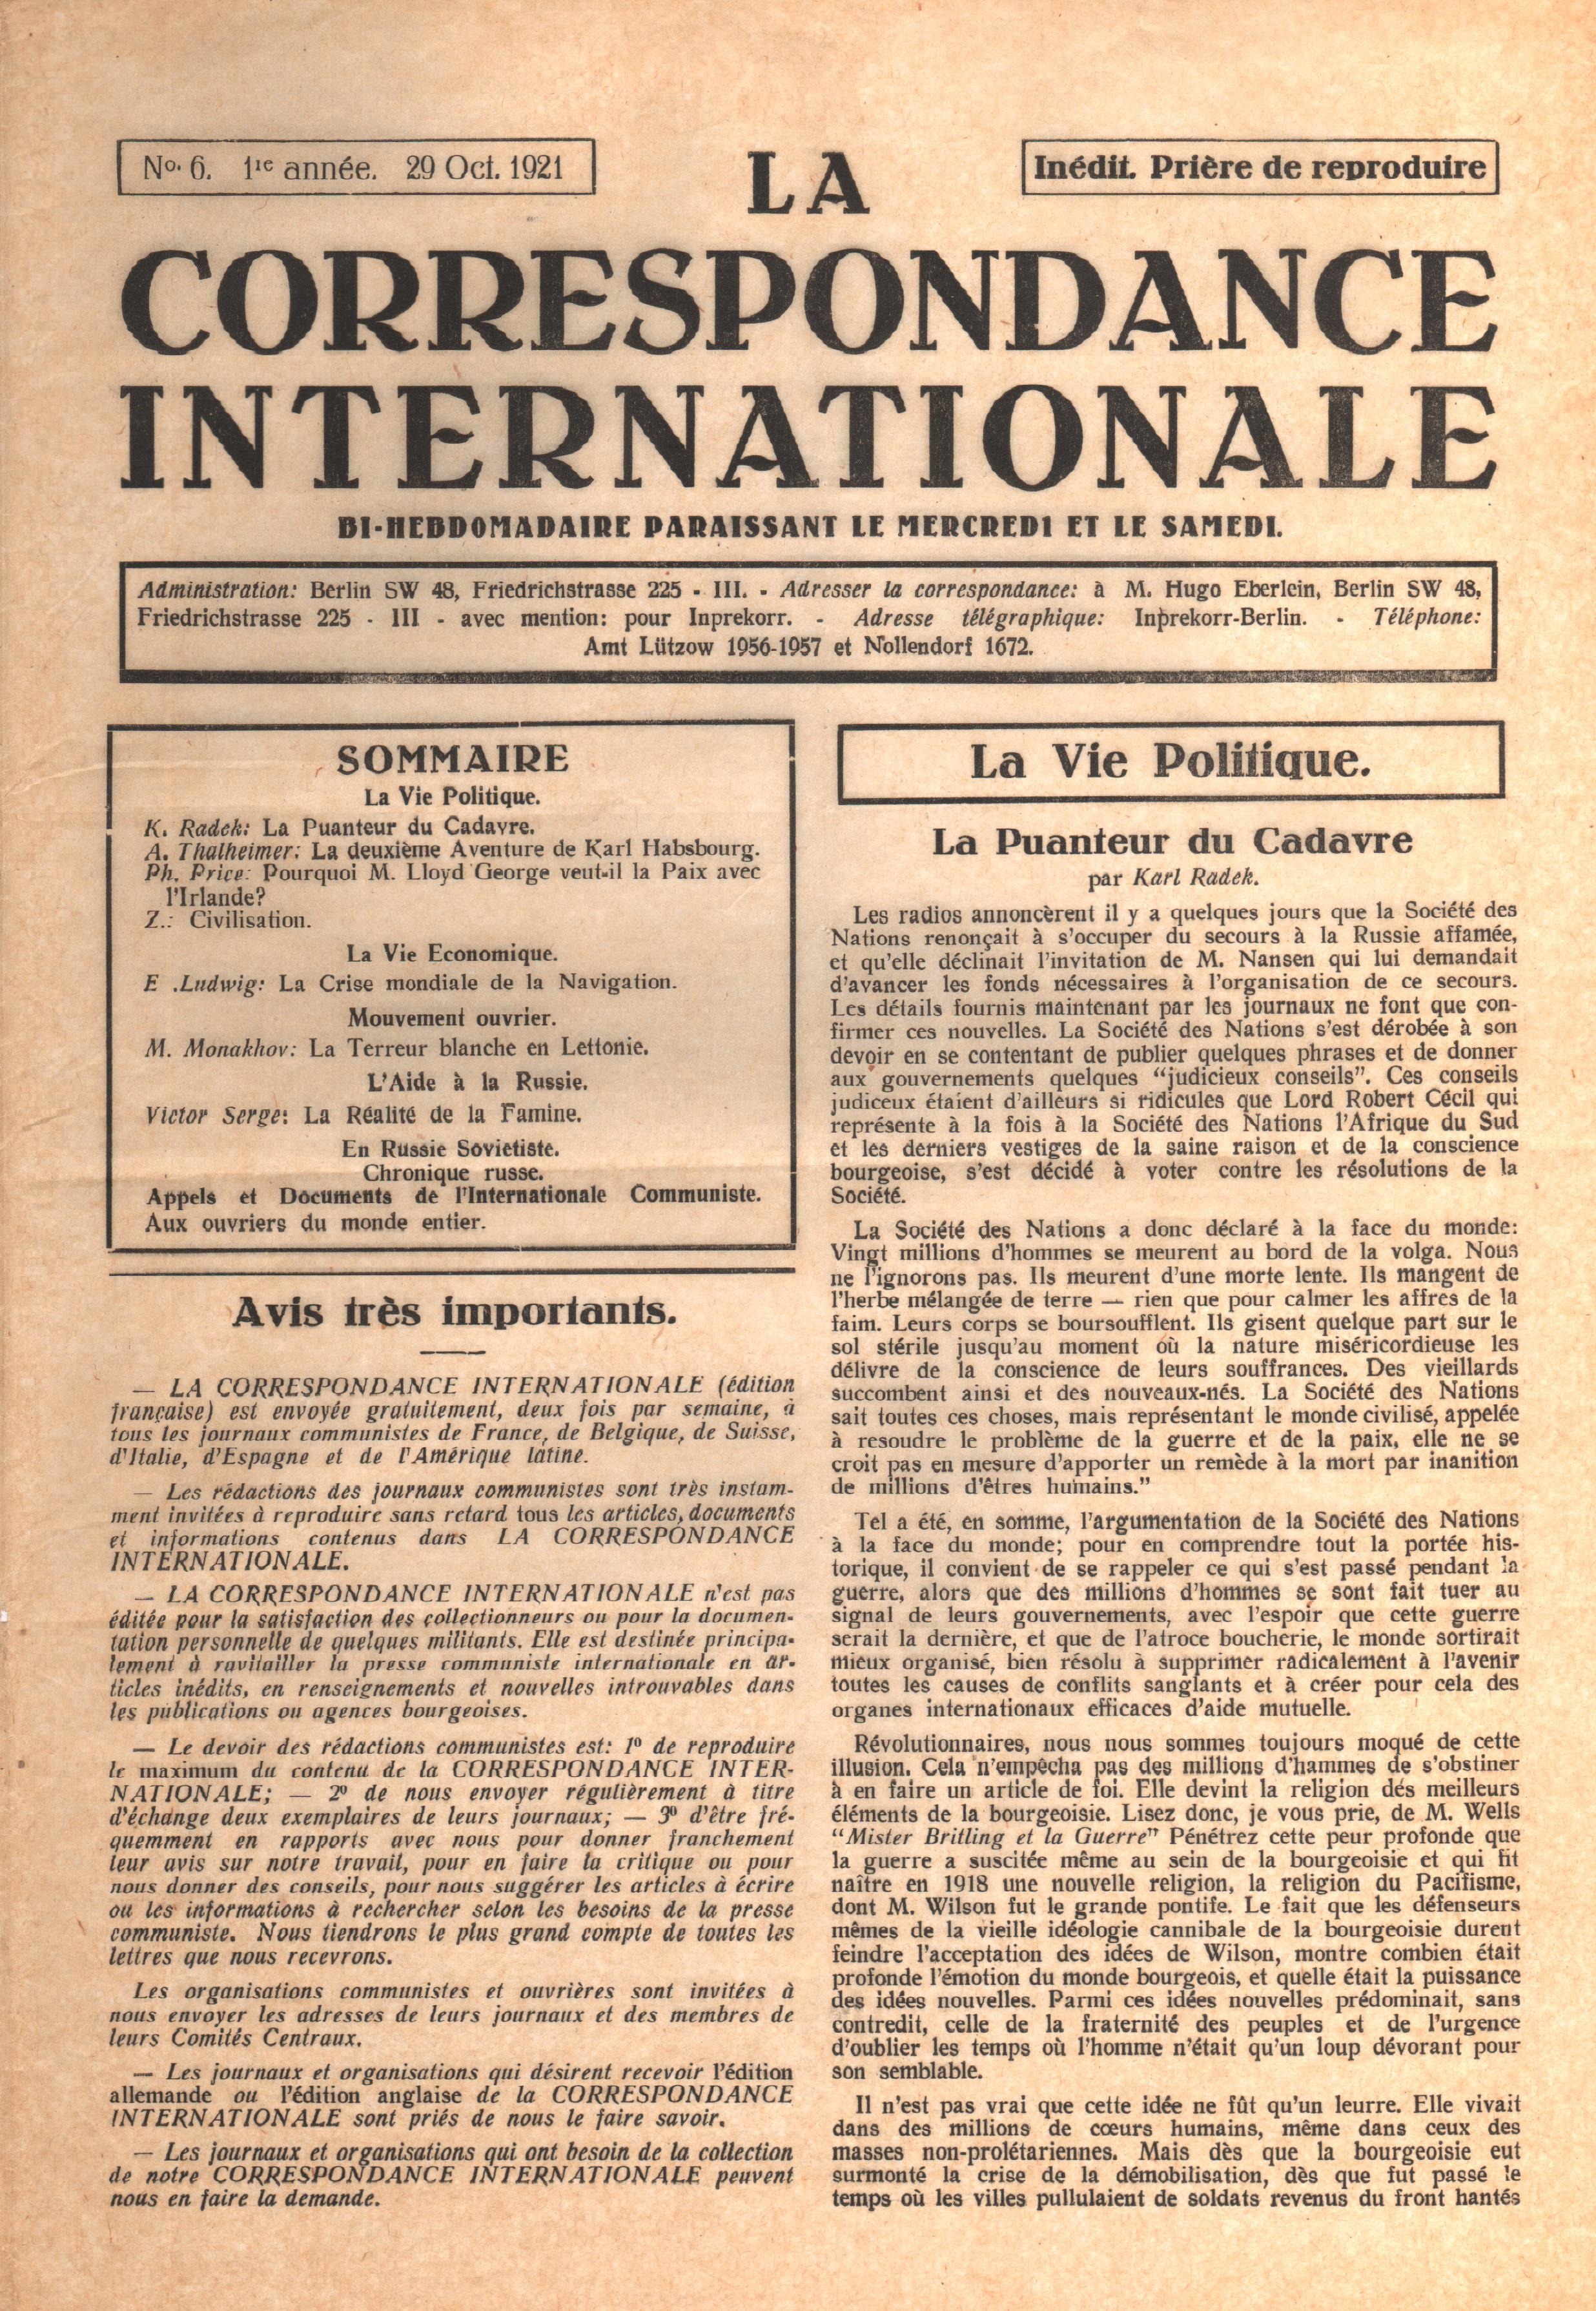  Correspondance Internationale n.6 - pag. 1